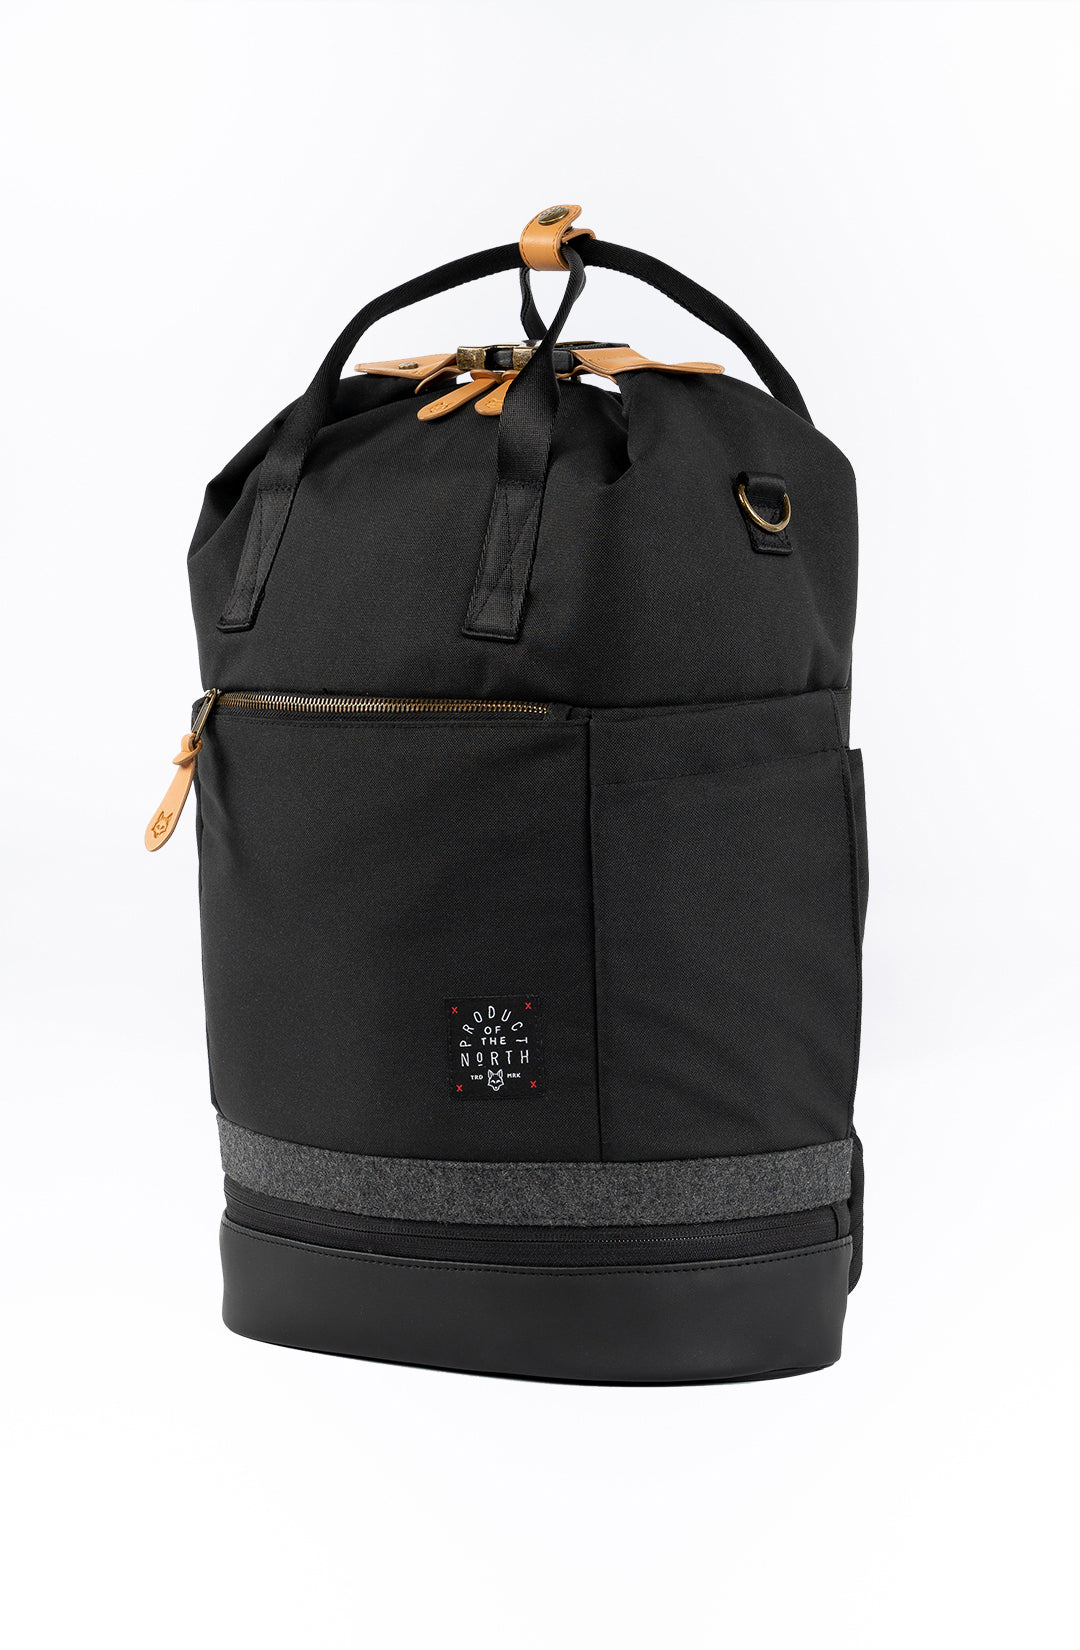 Modrn Diaper Bag Convertible Backpack Navy